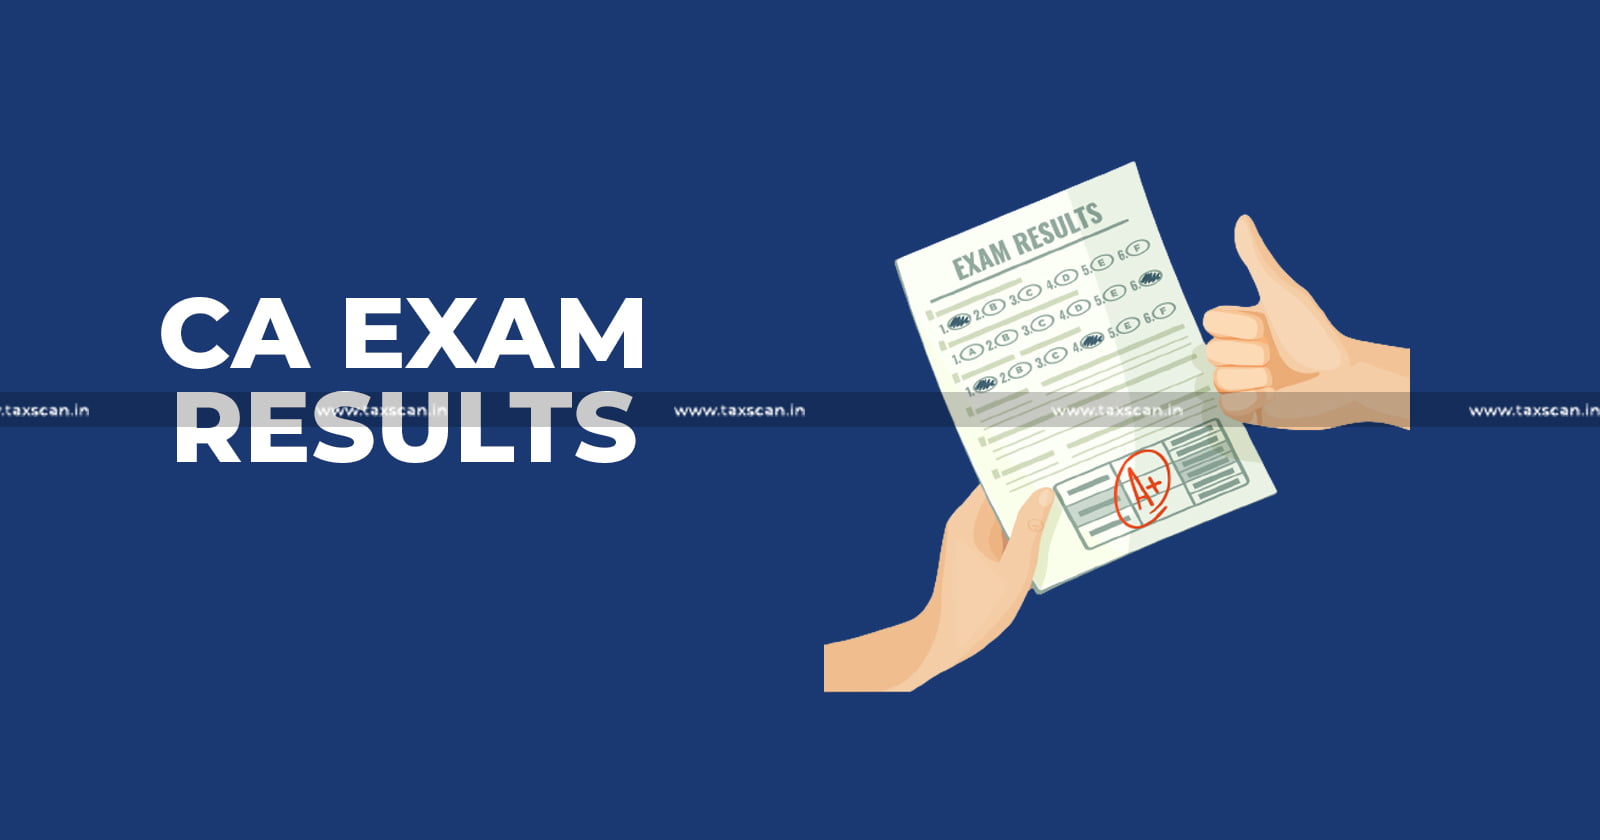 ICAI - CA Exam - CA - CA Exam Results - Exam Results - Chartered Accountants - ICAI to Declare CA Exam Results - taxscan